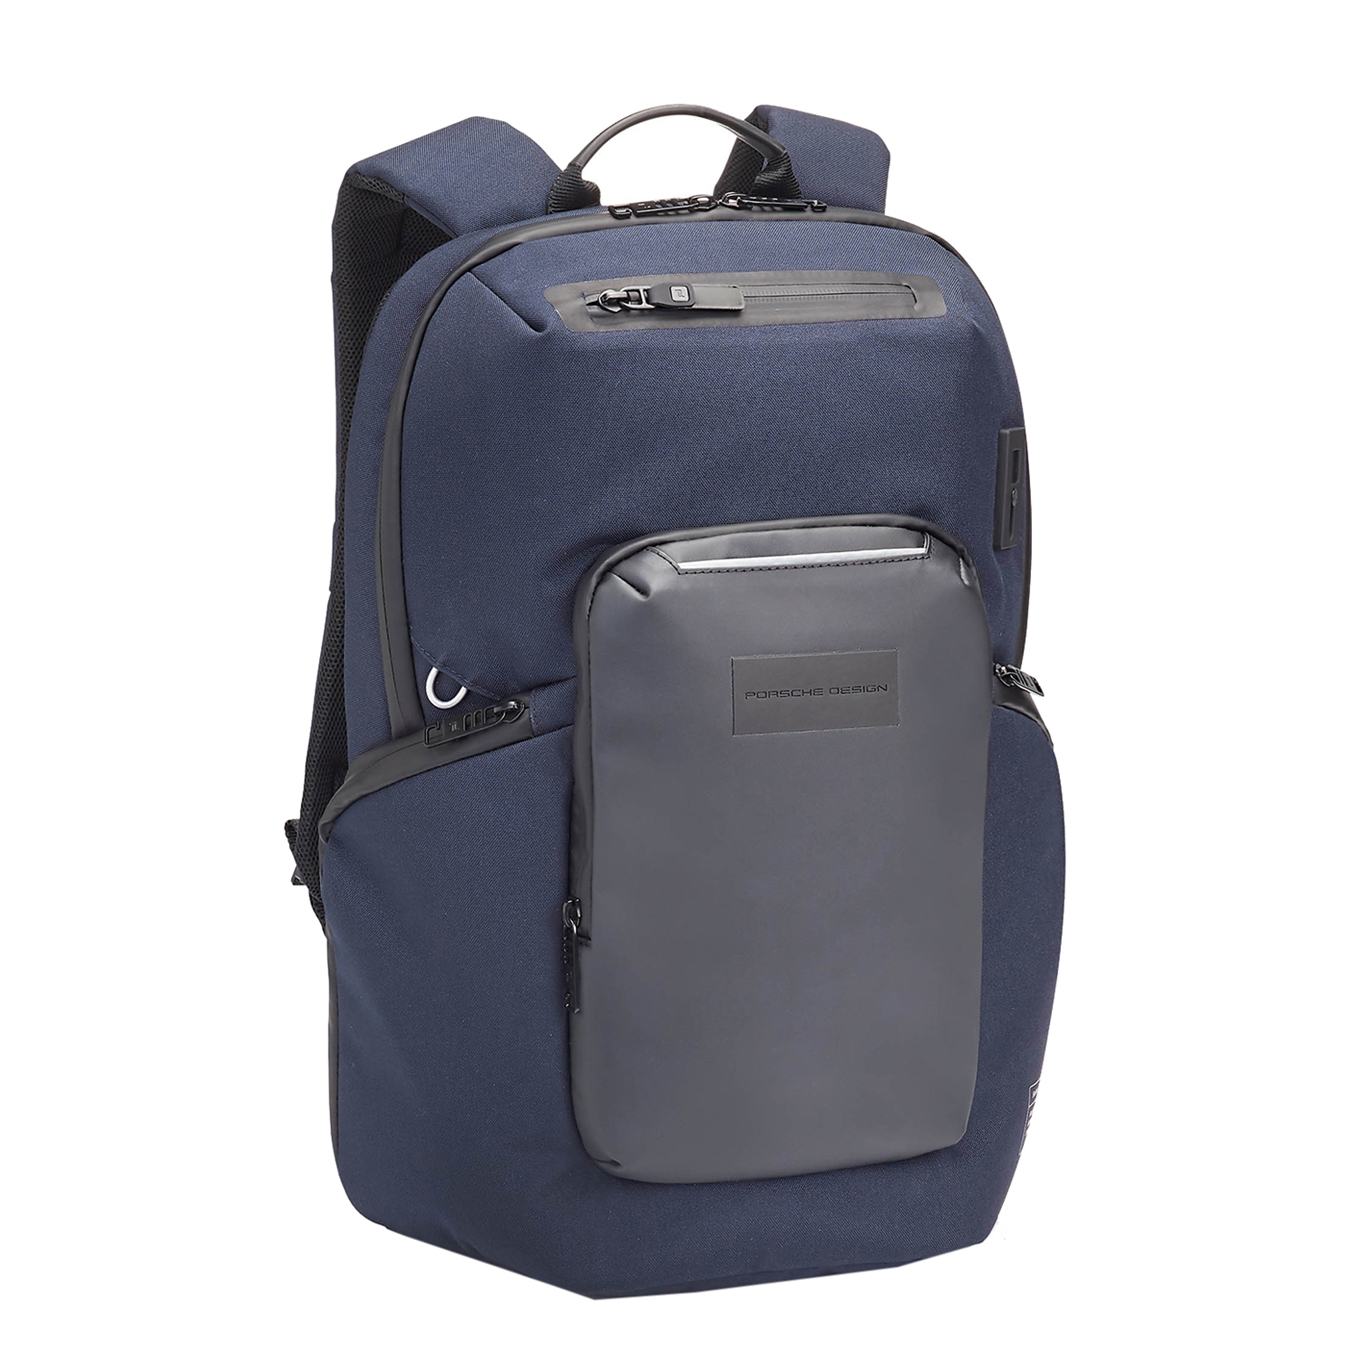 Porsche Design Urban Eco Backpack S dark blue backpack - Tas2go